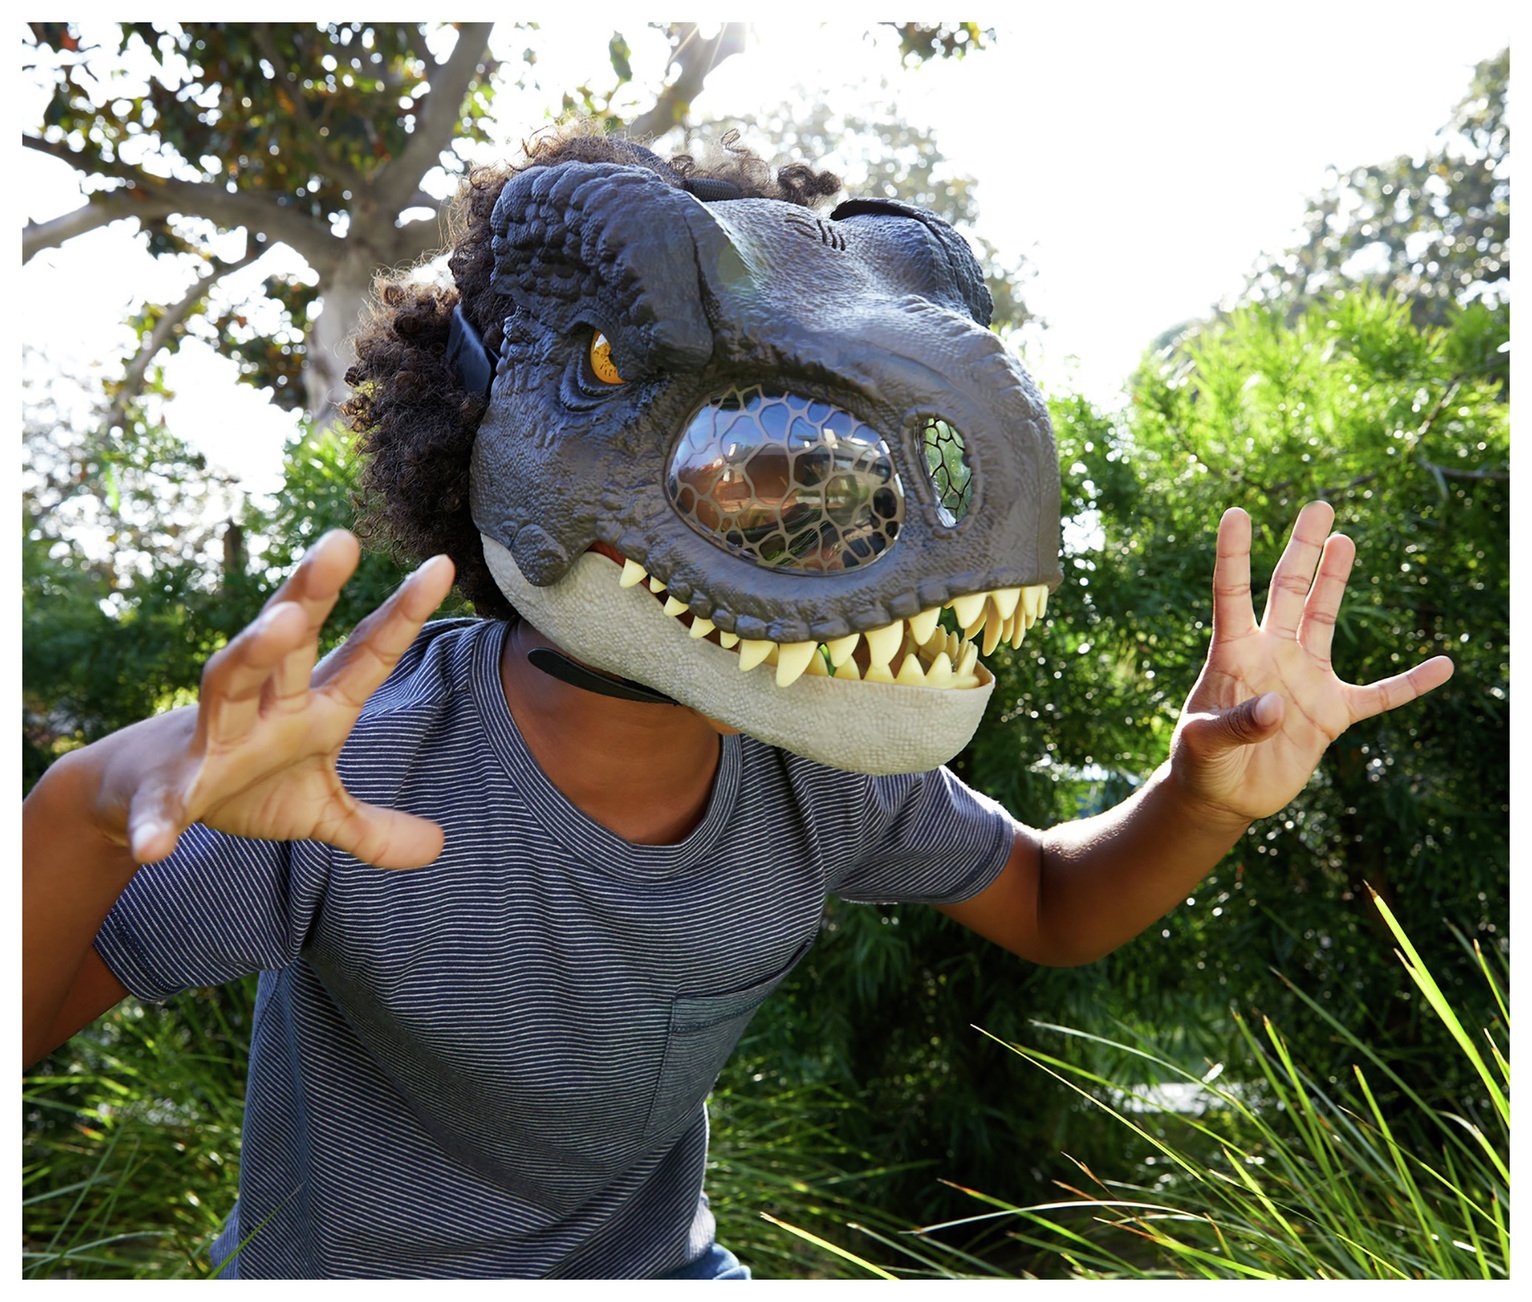 Jurassic World Dominion Chomp 'N Roar Tyrannosaurus Rex Mask review